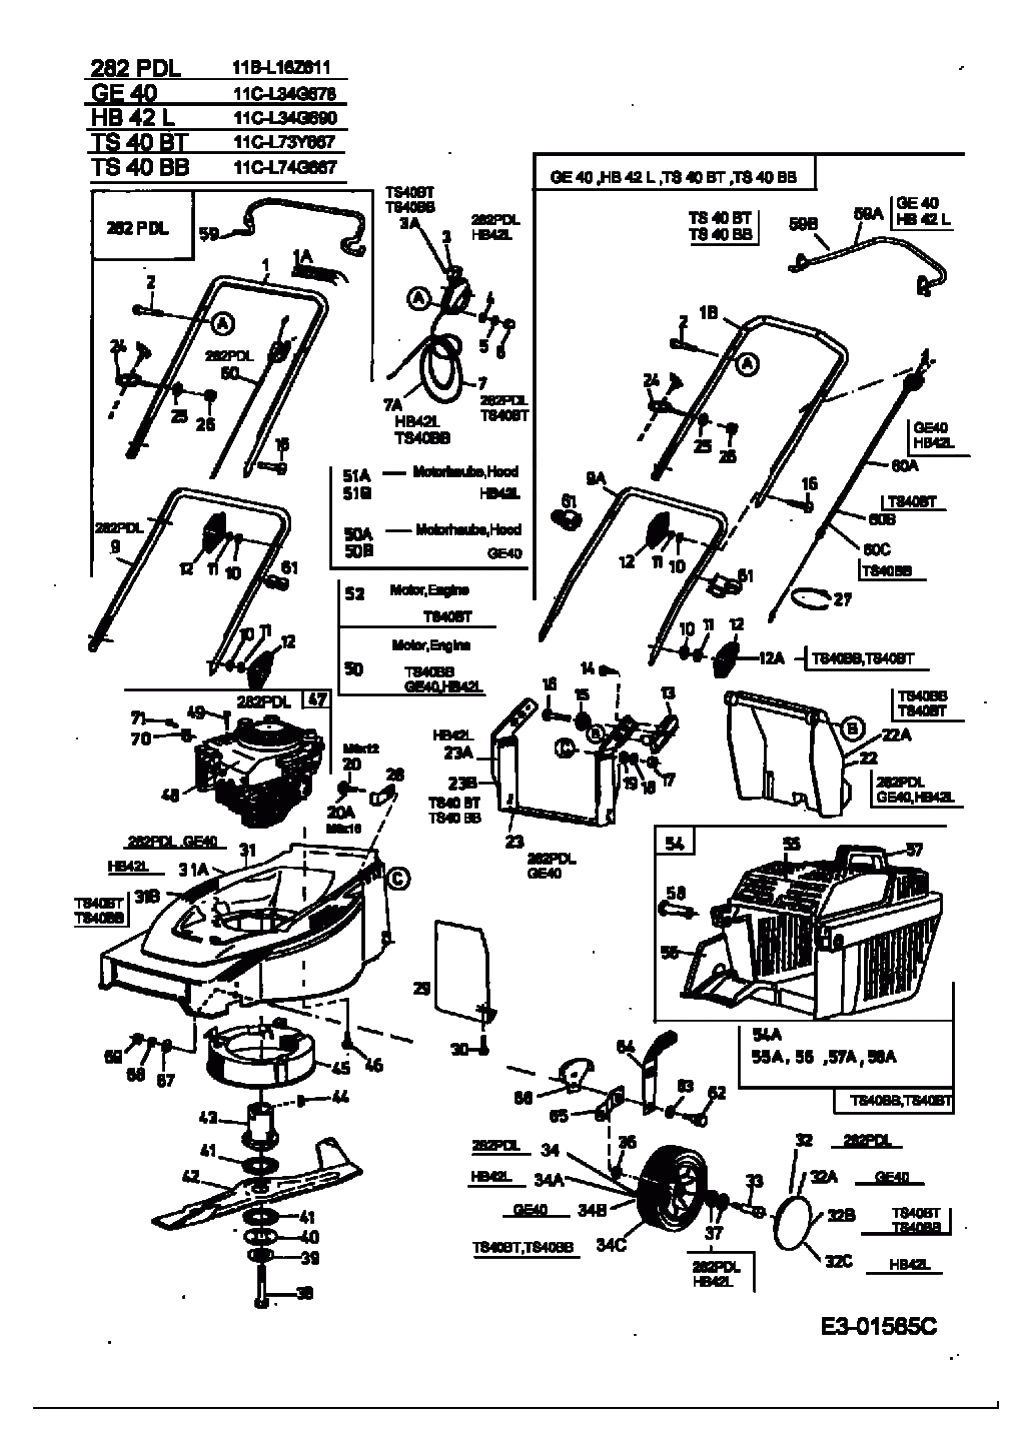 MTD Артикул 11C-L34G678 (год выпуска 2003). Основная деталировка